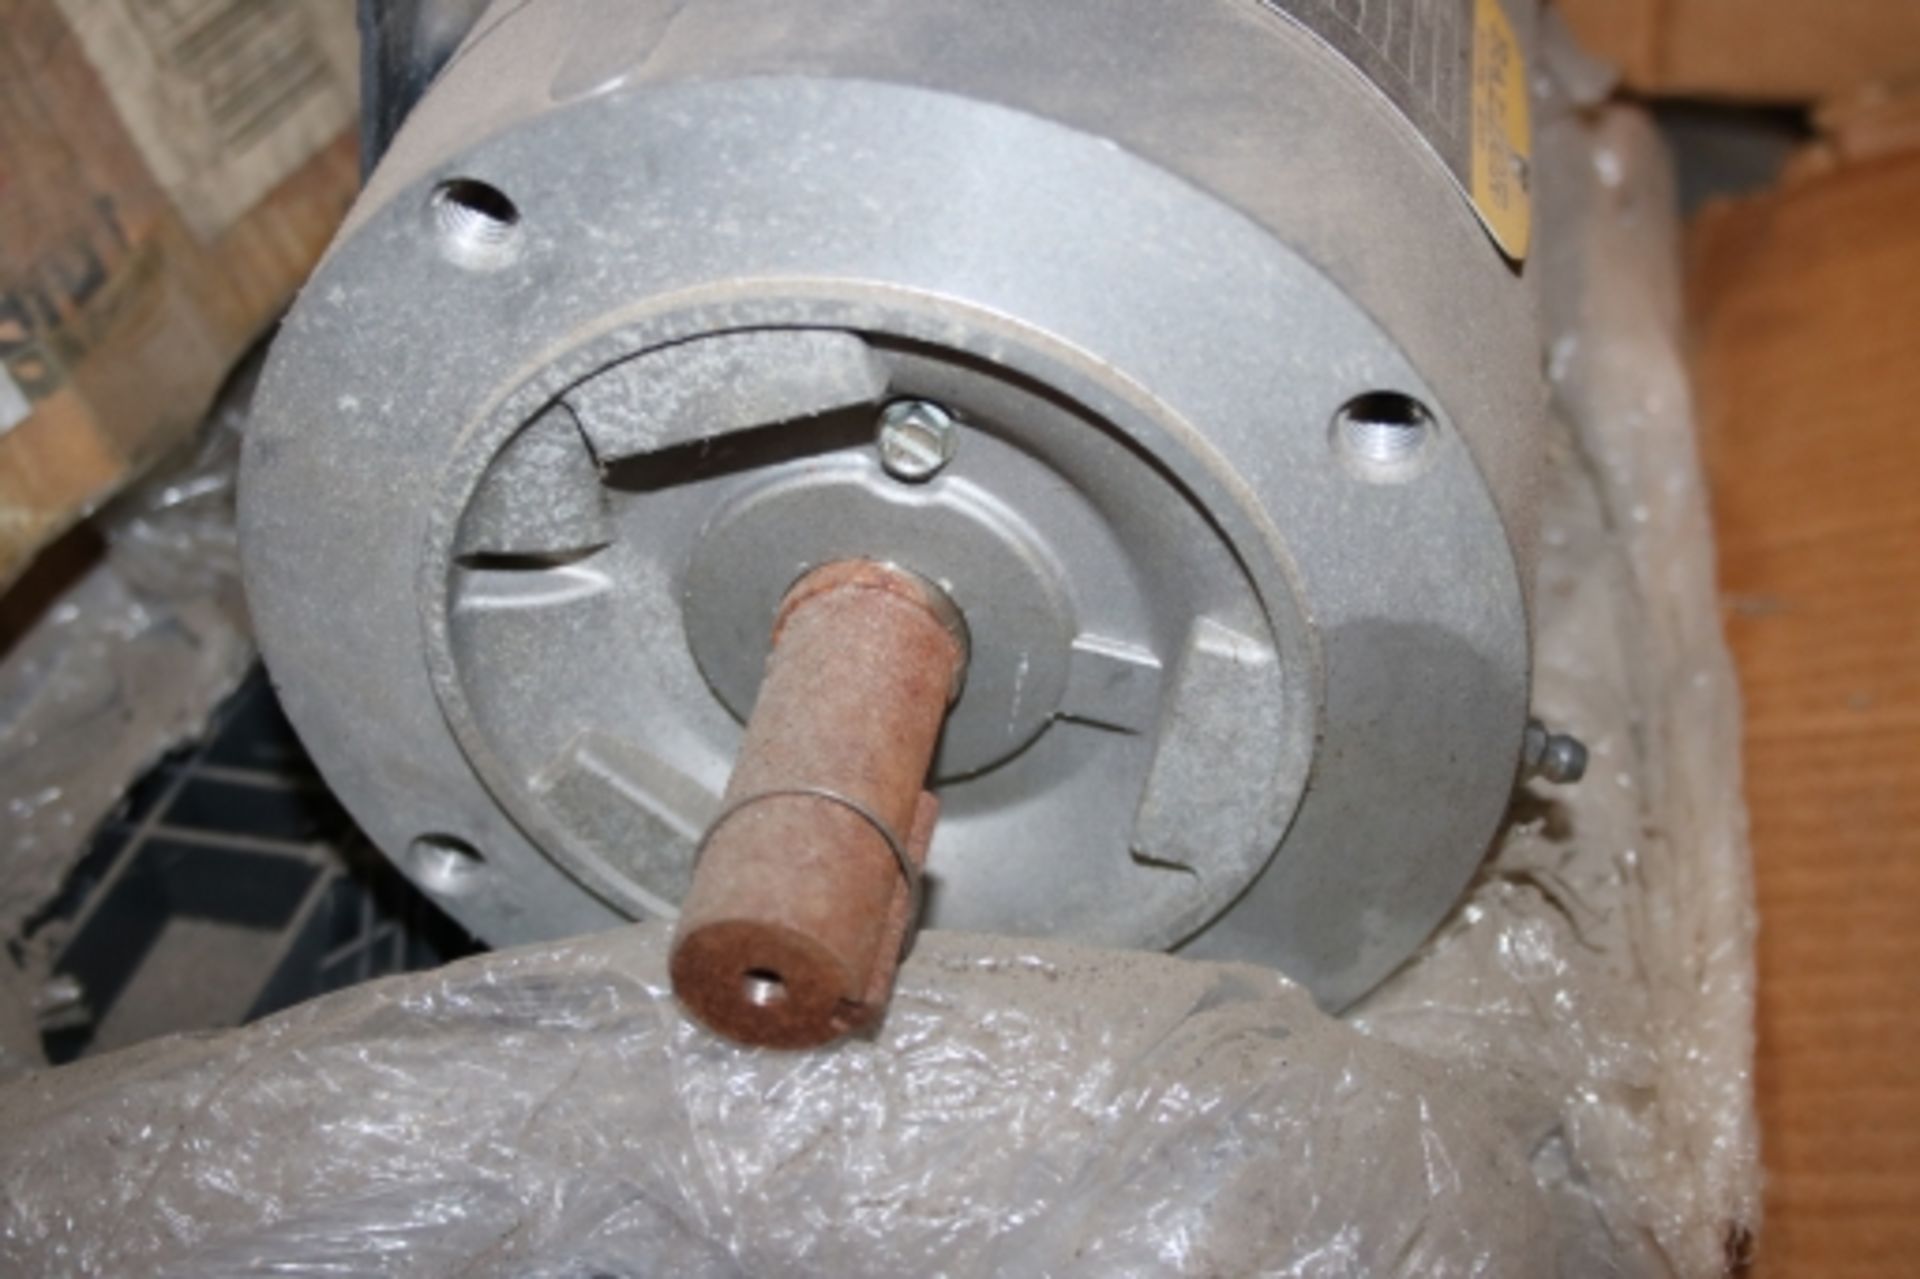 NEW - Baldor Industrial Motor, 2hp/1740 rpm - Image 5 of 8